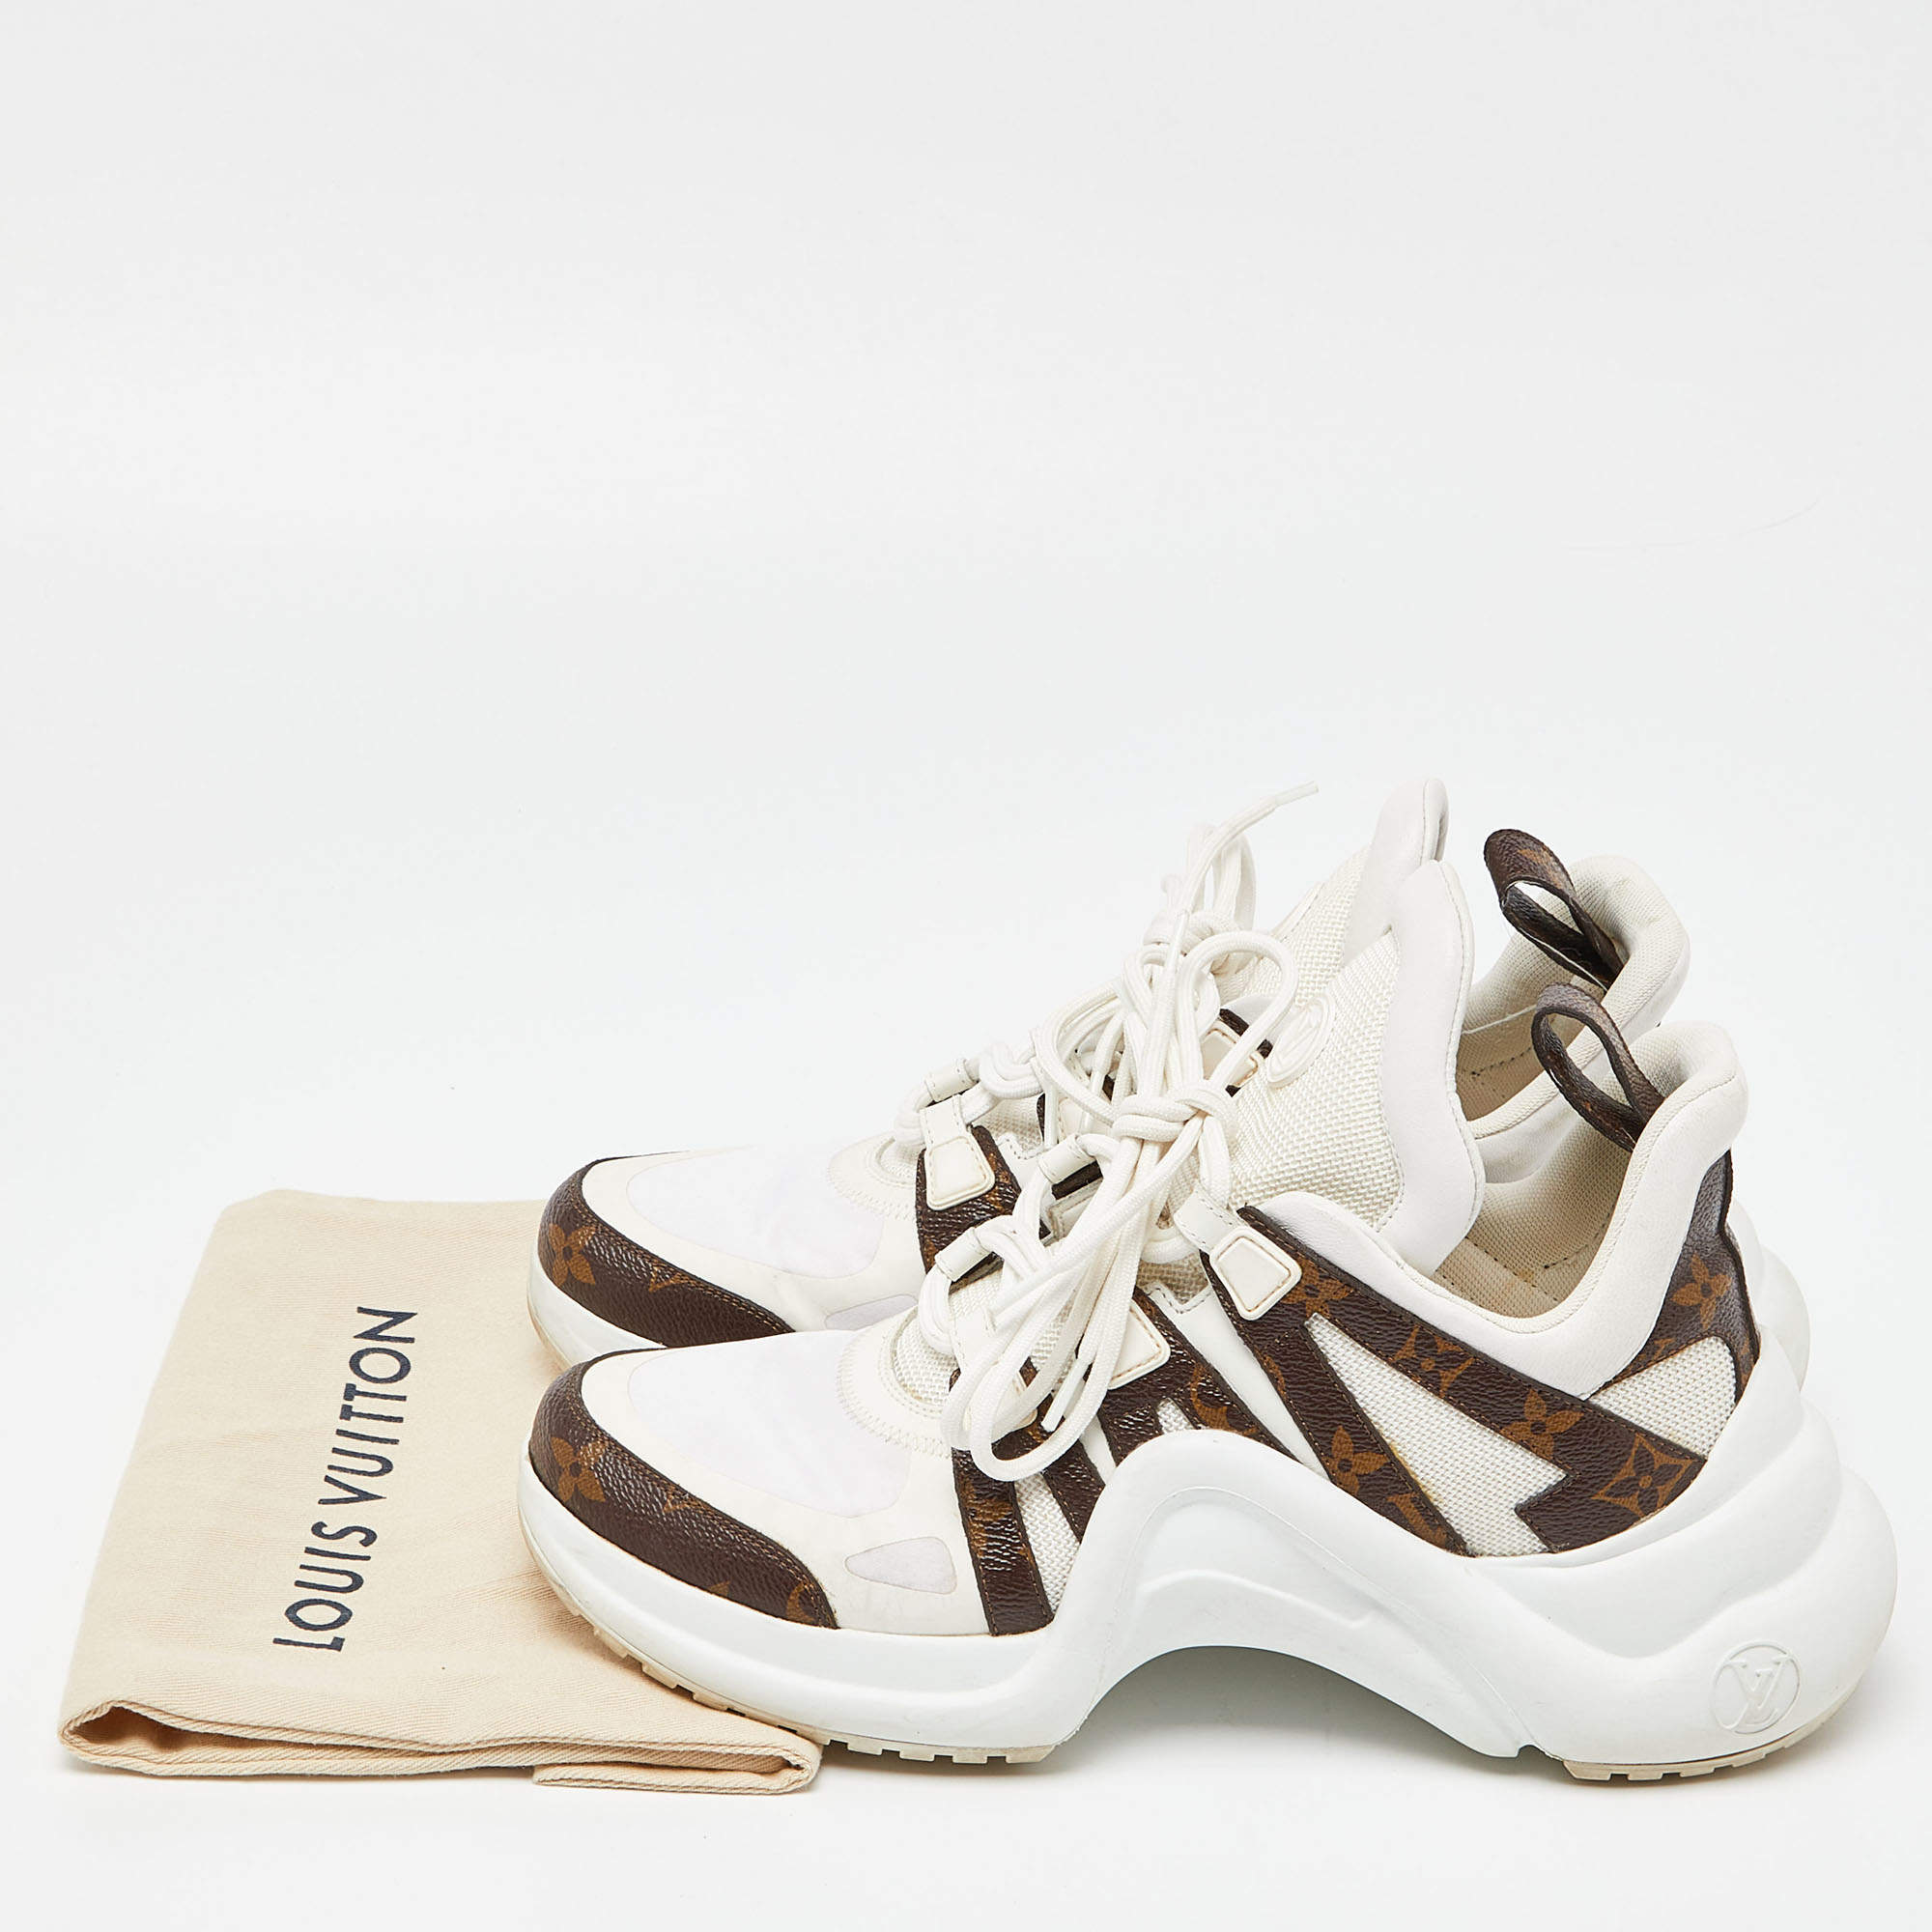 Louis Vuitton Louis Vuitton Wmns Archlight Sneaker 'White Brown' | Women's Size 5.5